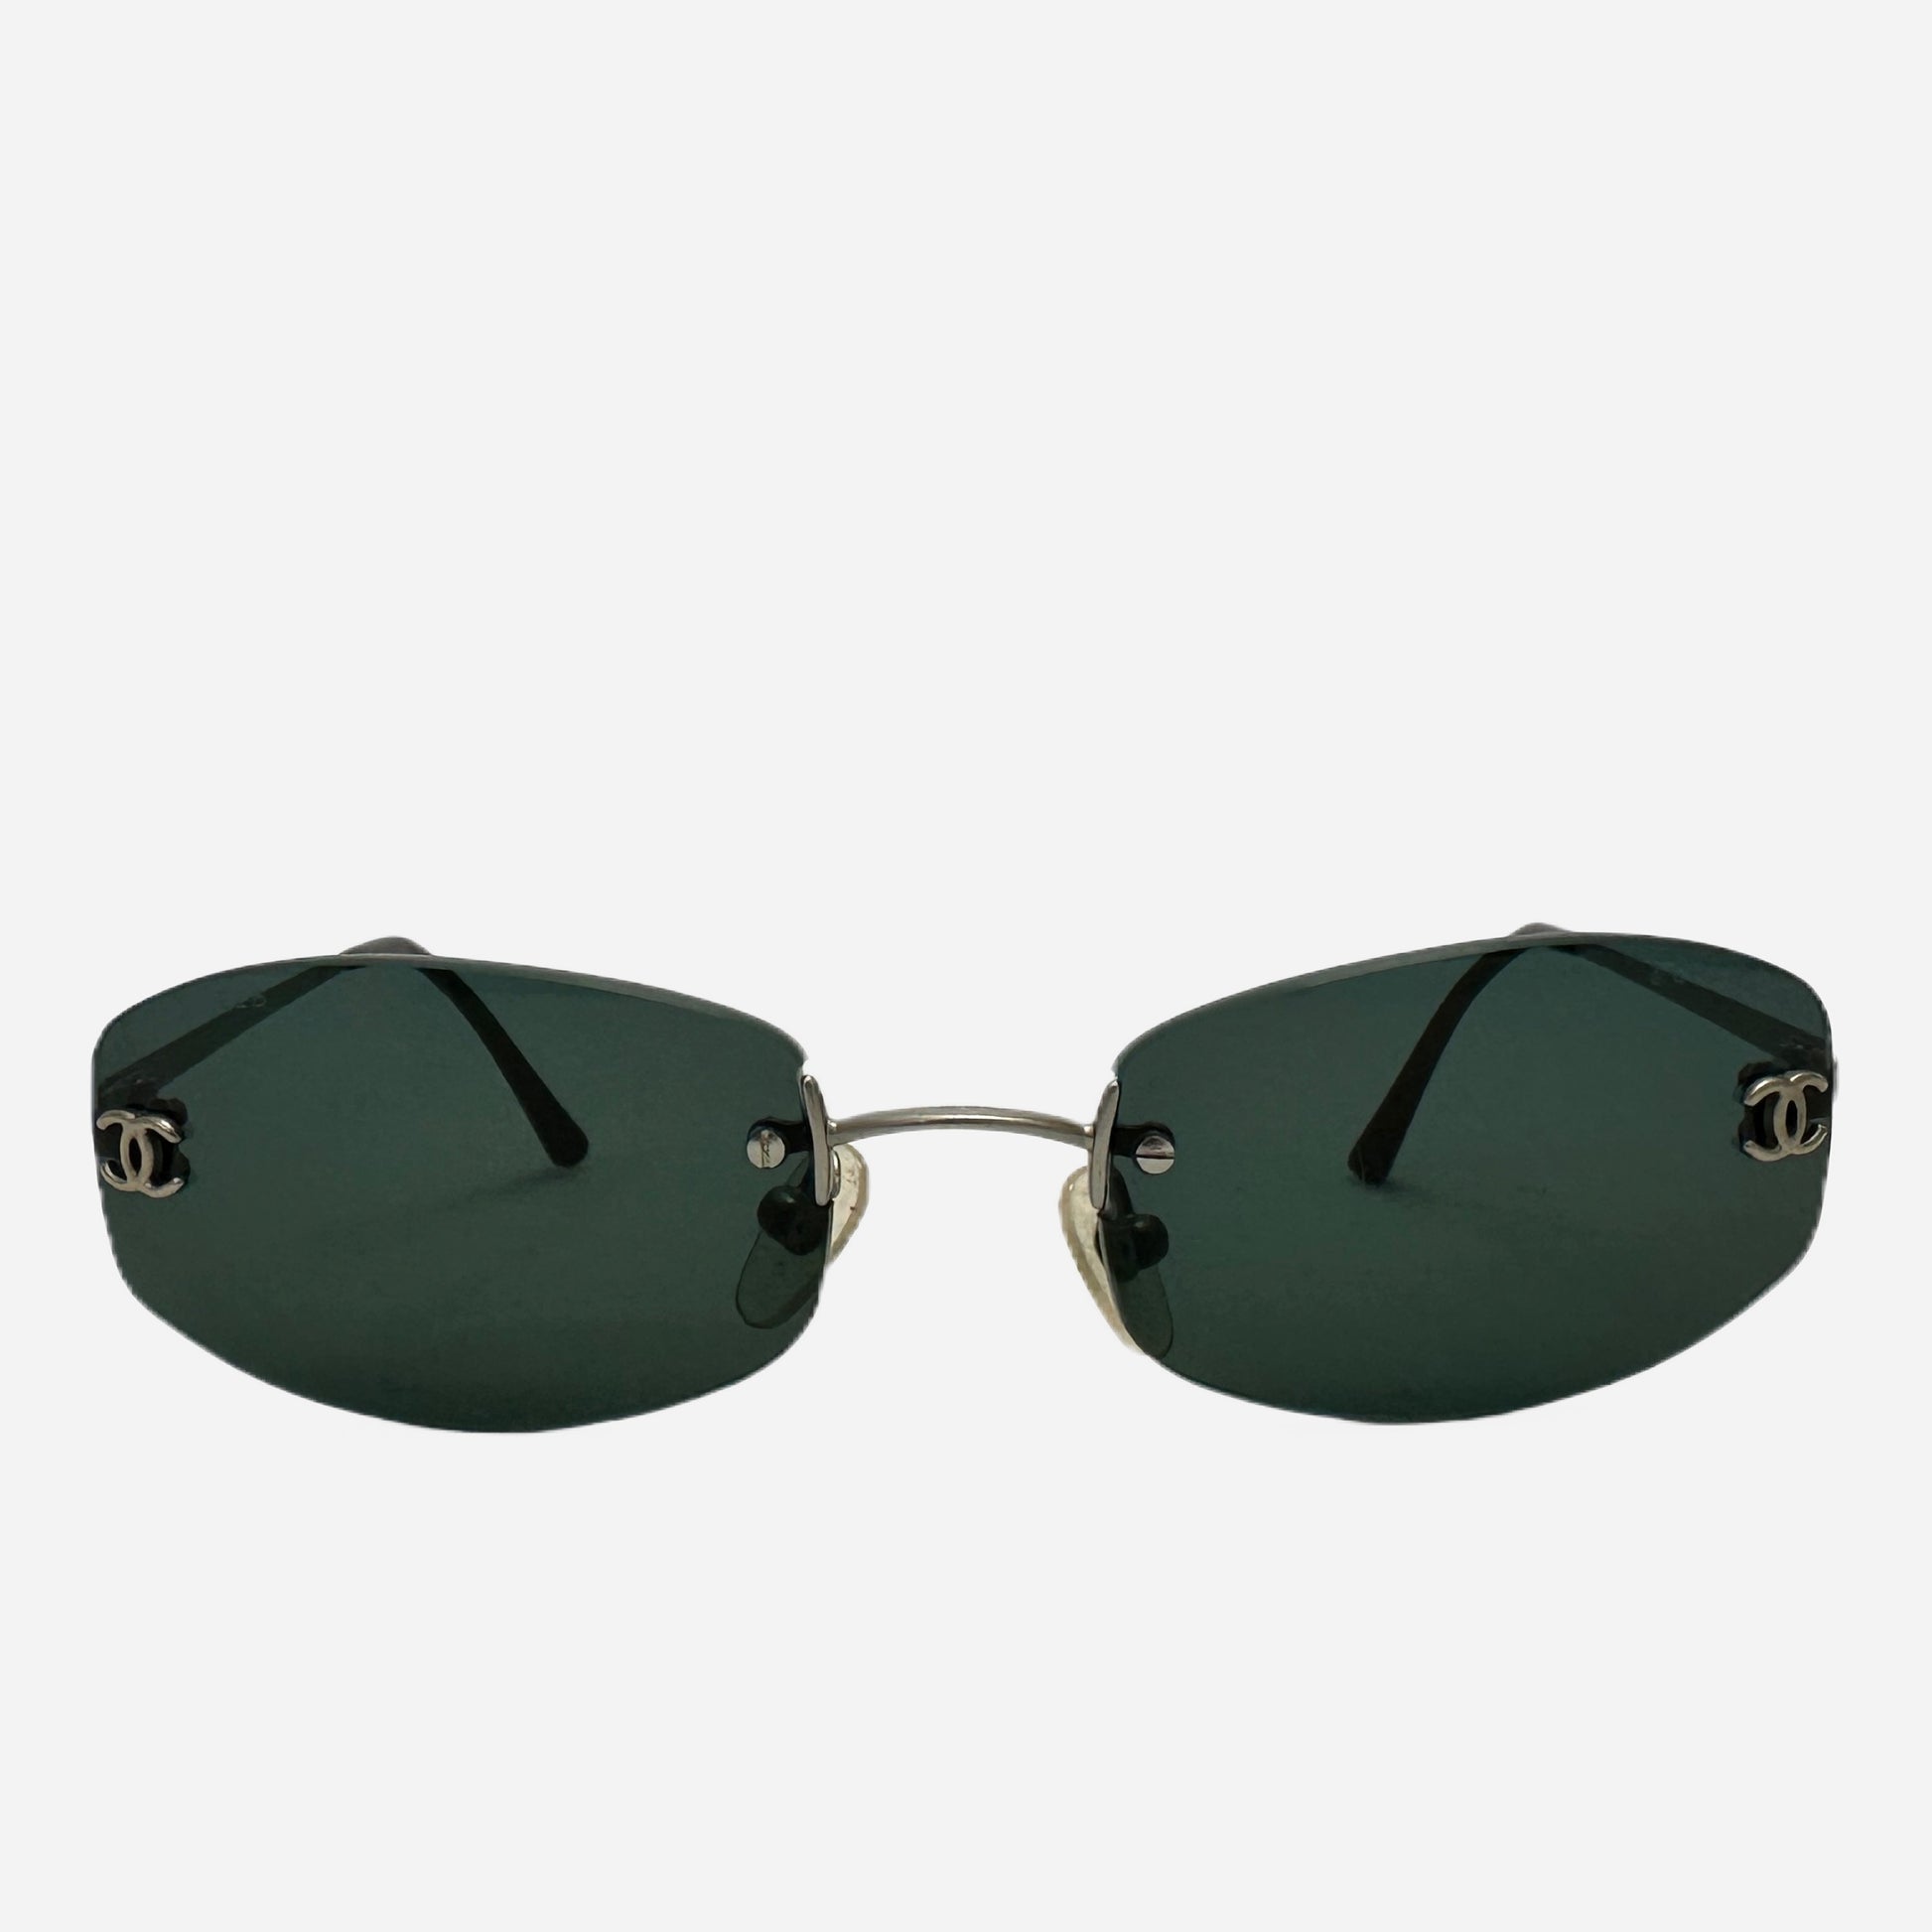 silver chanel sunglasses vintage